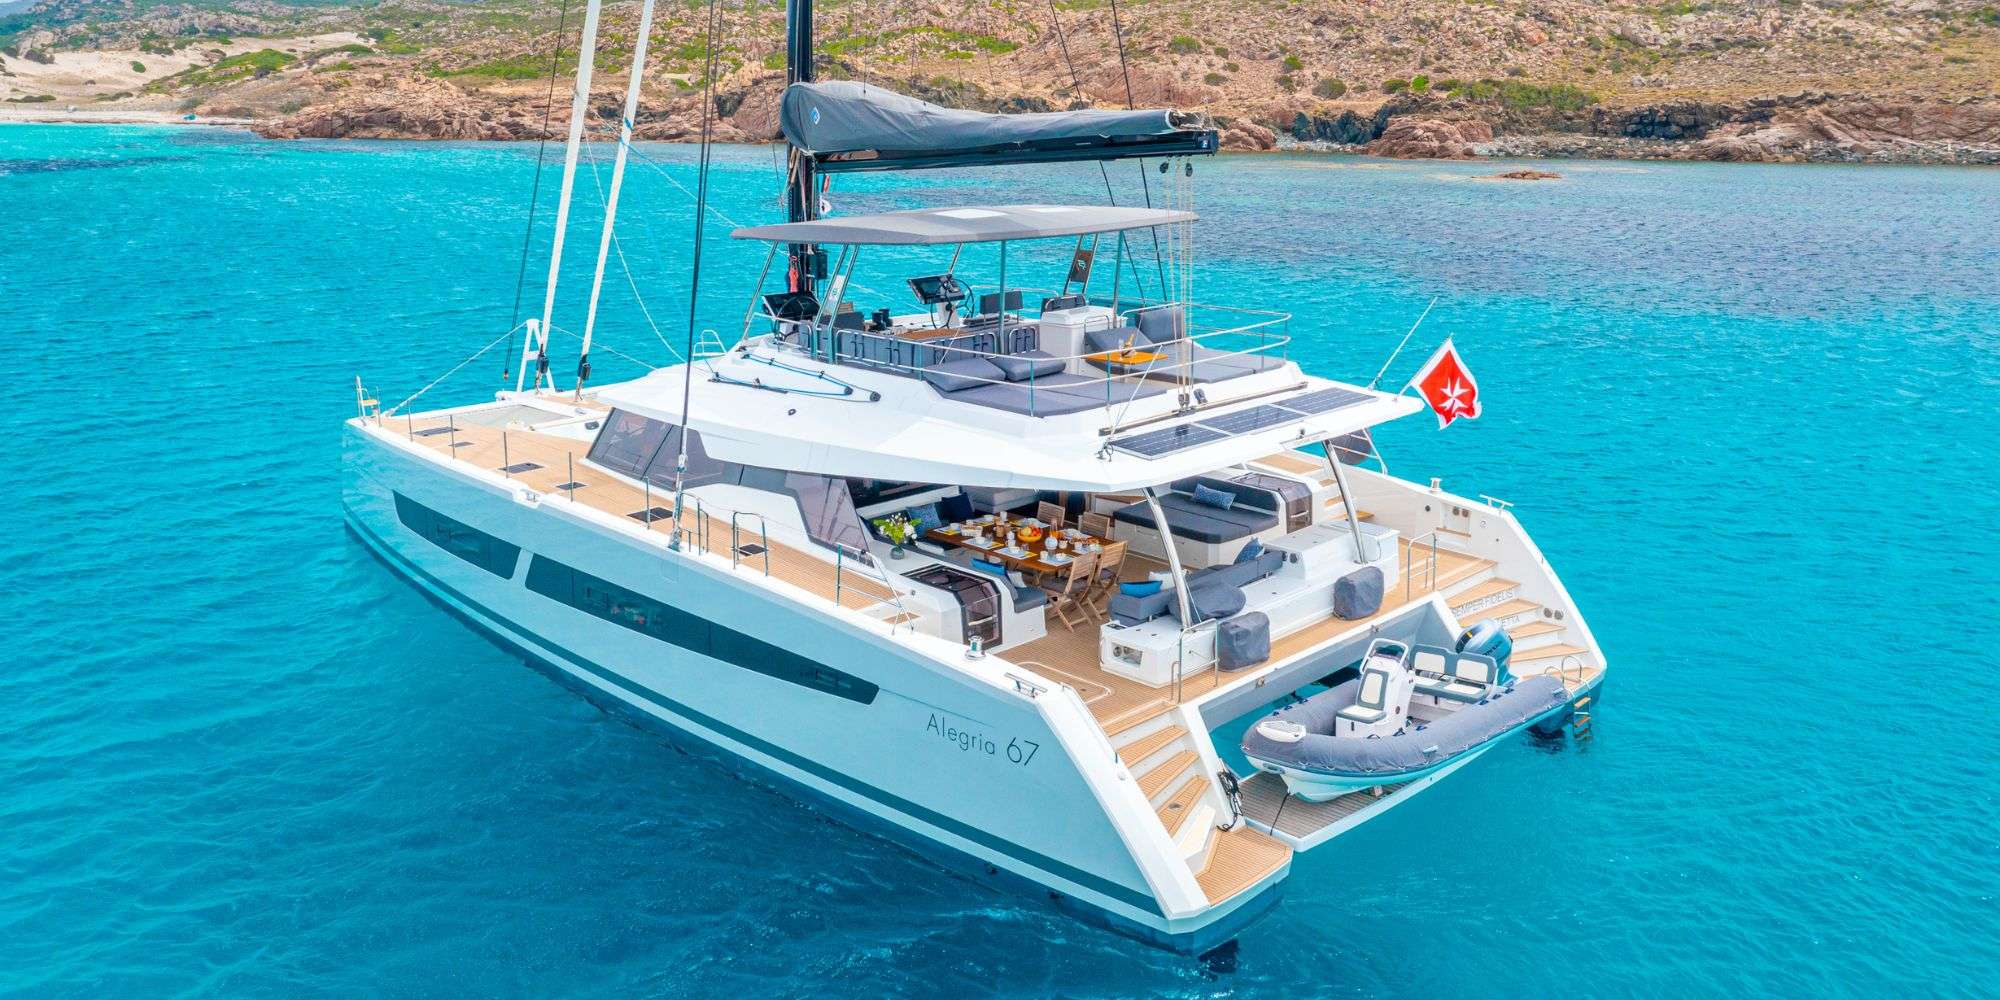 SEMPER FIDELIS - Luxury yacht charter Grenada & Boat hire in Bahamas & Caribbean 2